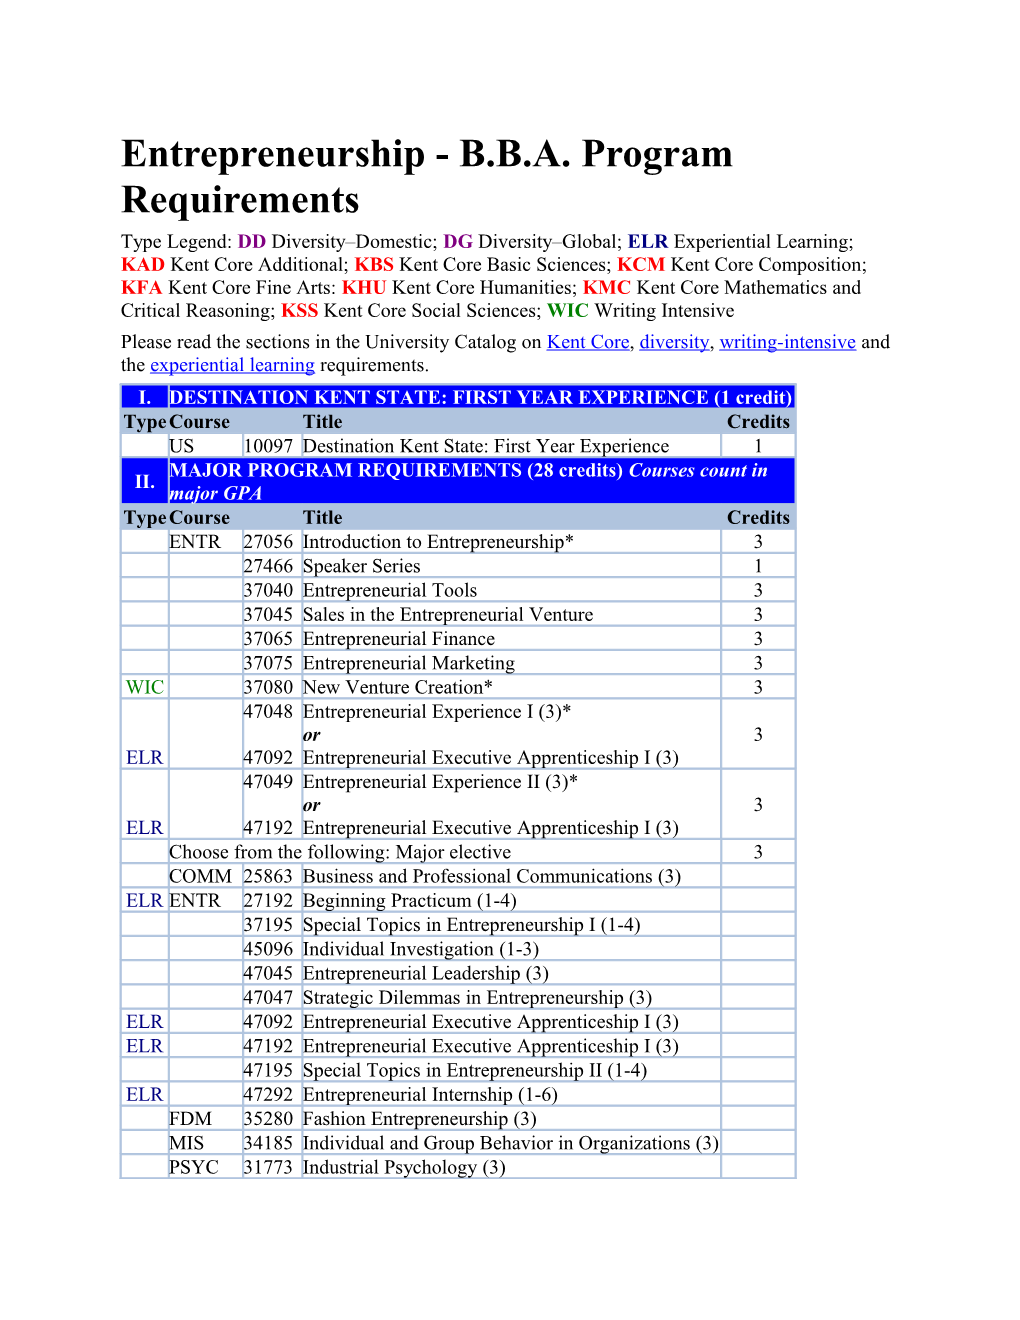 Entrepreneurship - B.B.A. Program Requirements